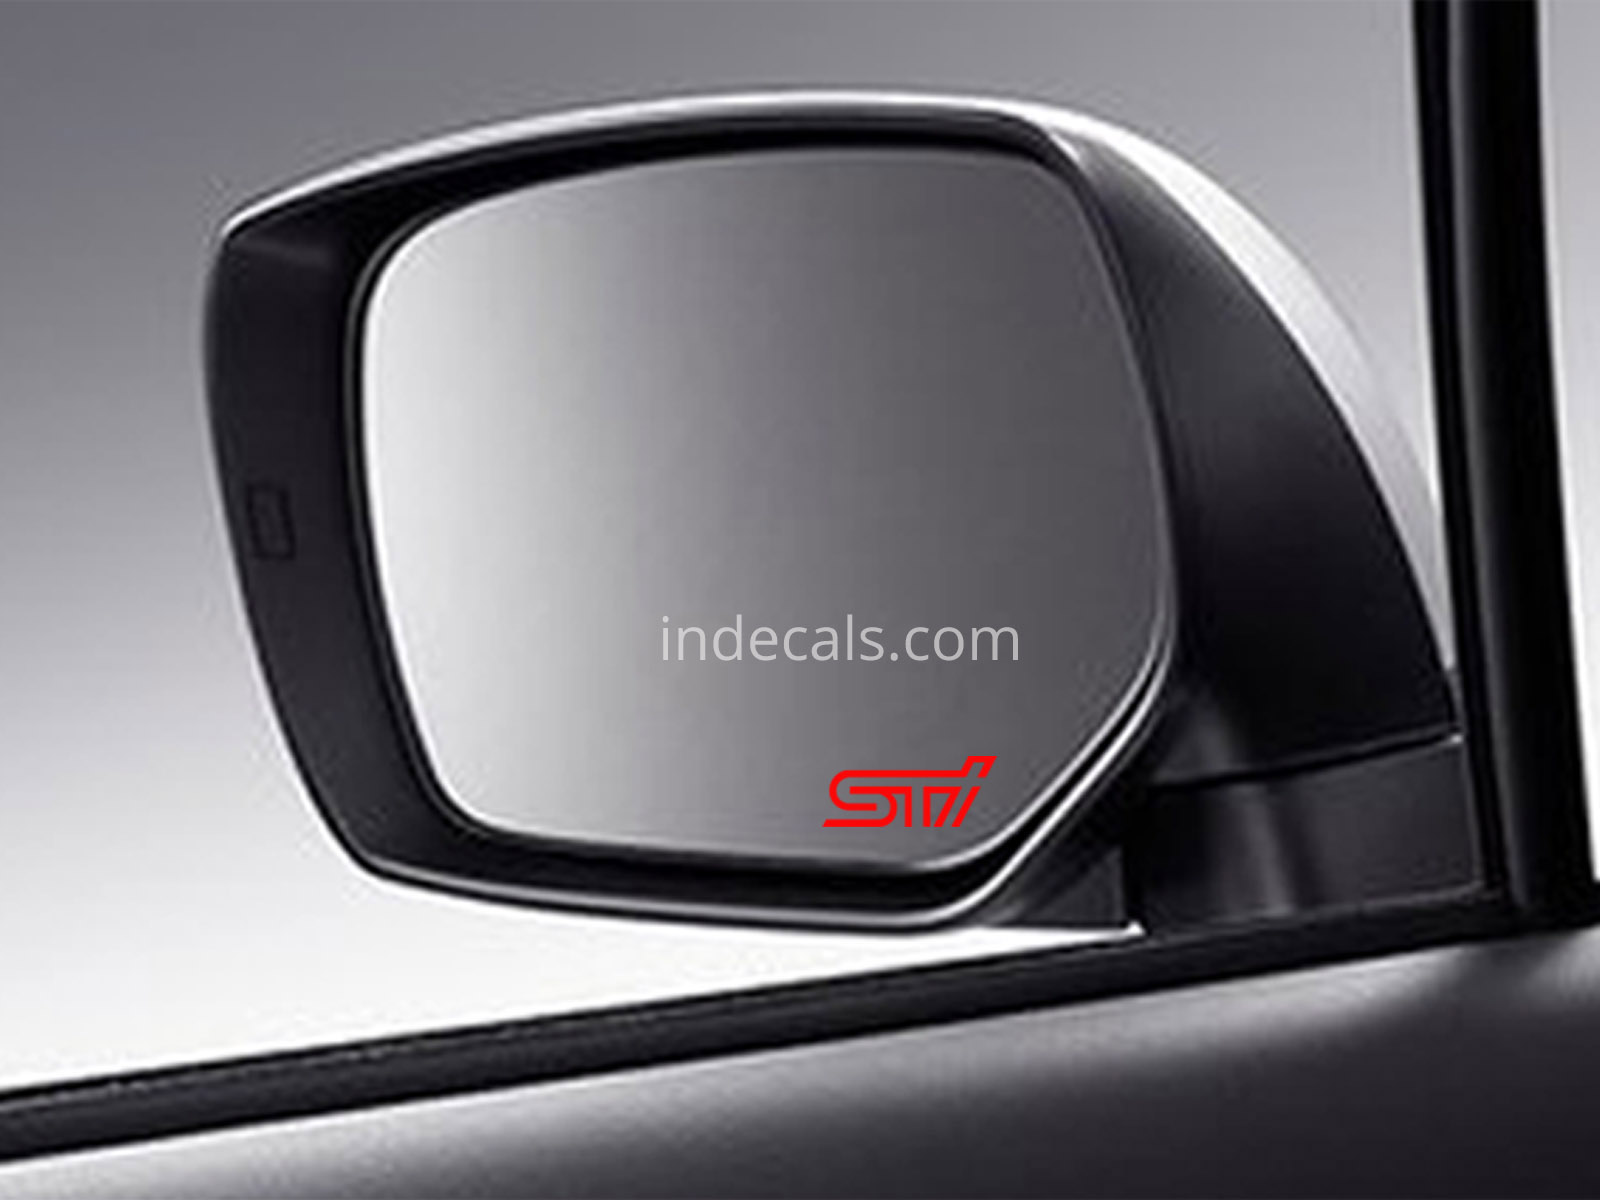 2 x Subaru STI stickers for Mirror - Red